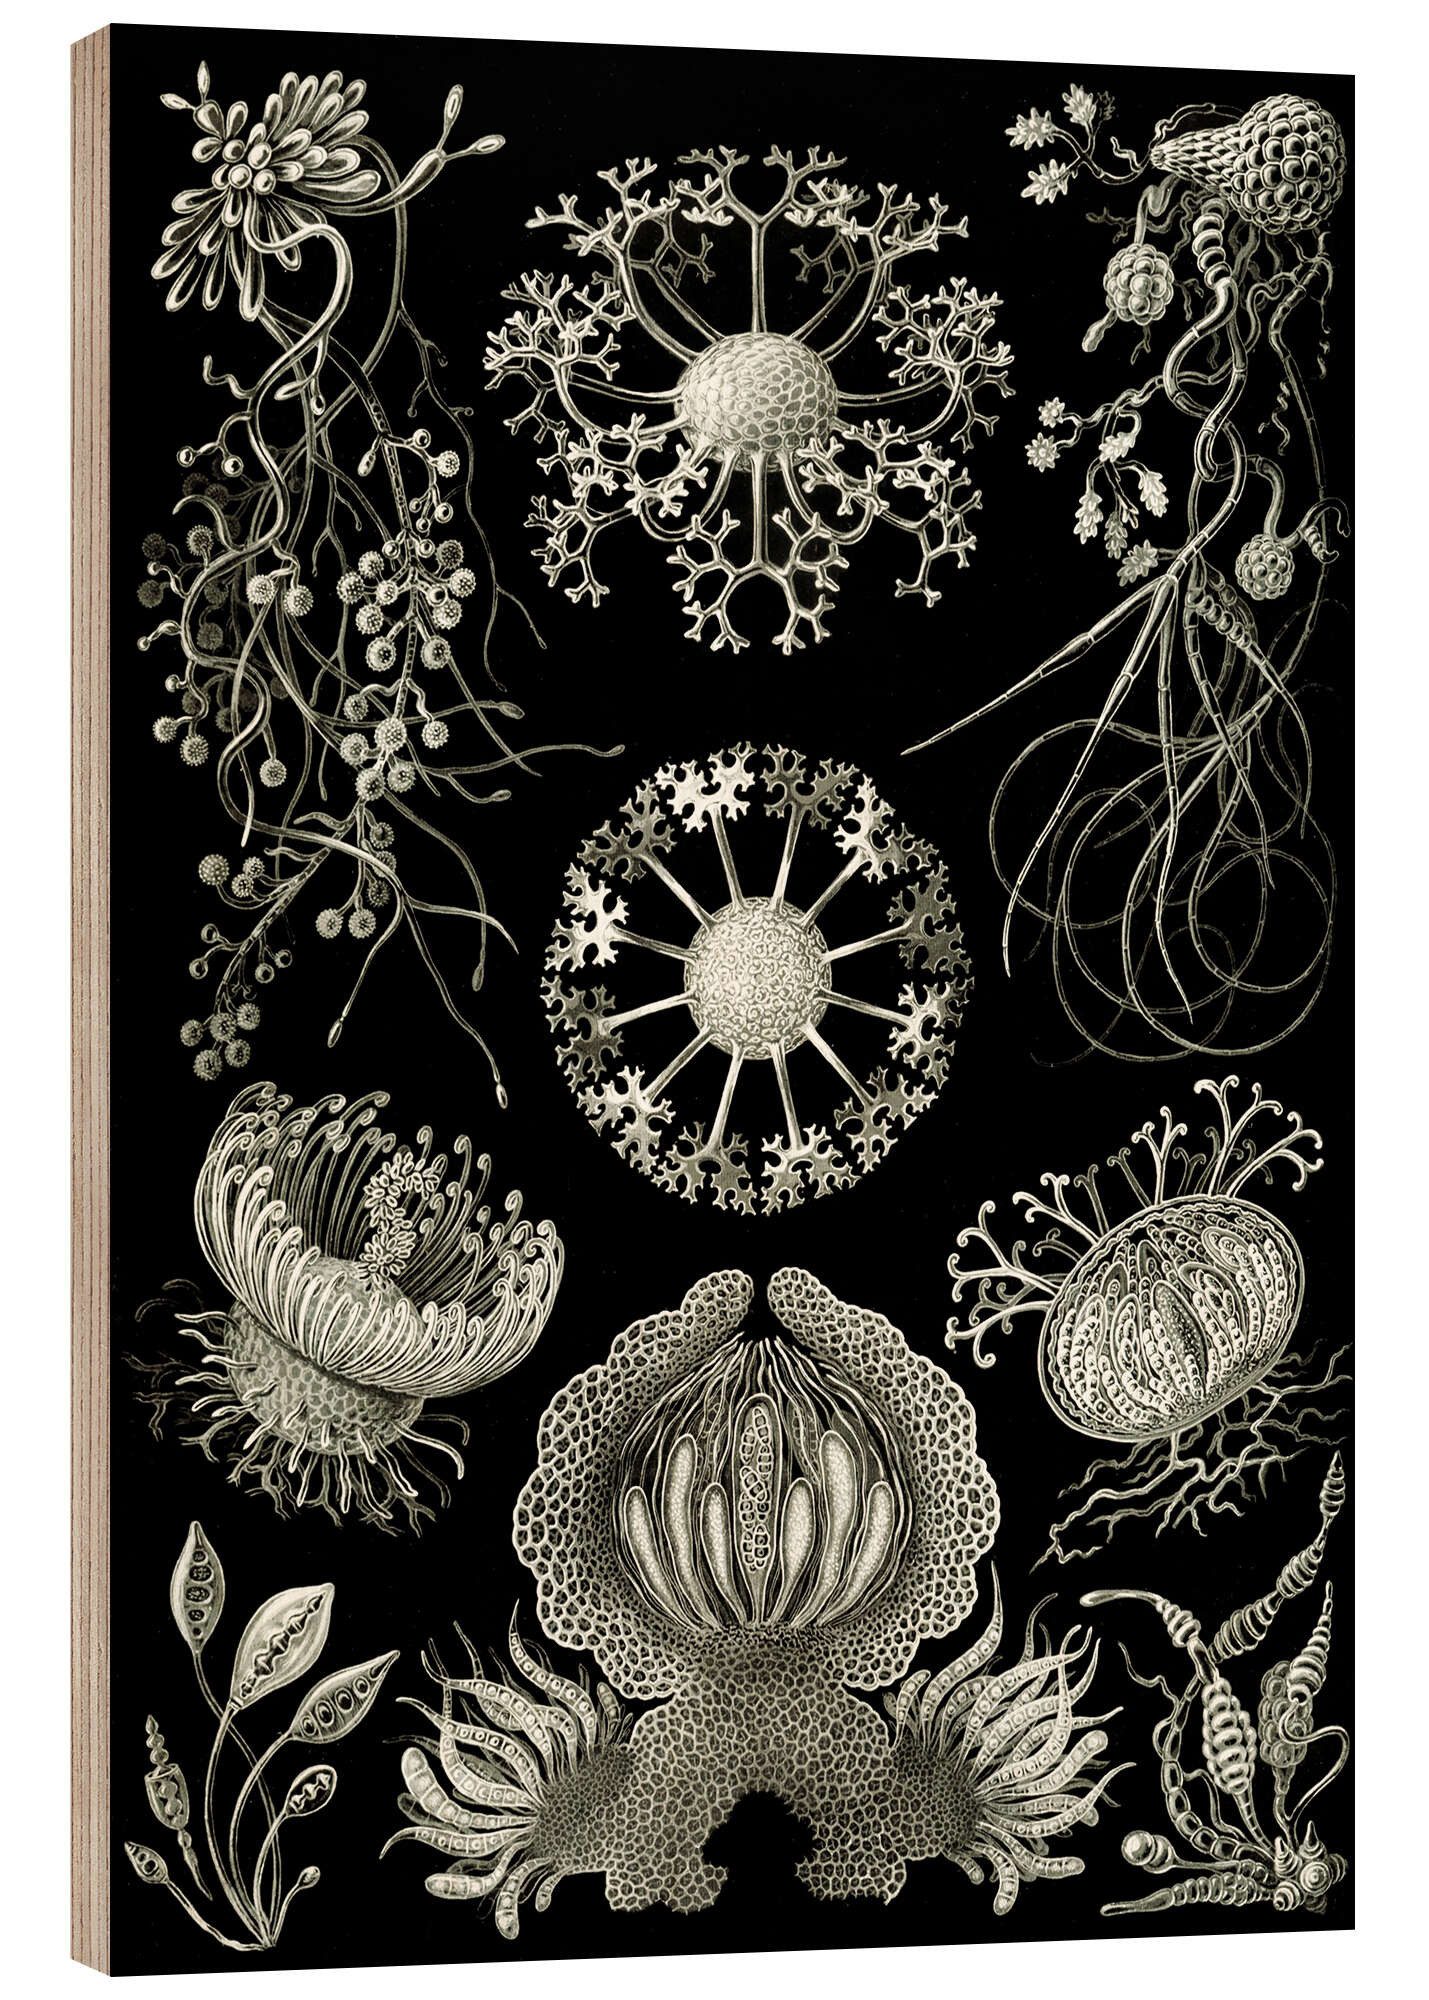 Posterlounge Holzbild Ernst Haeckel, Schlauchpilze, Ascomycetes (Kunstformen der Natur, 1899), Malerei